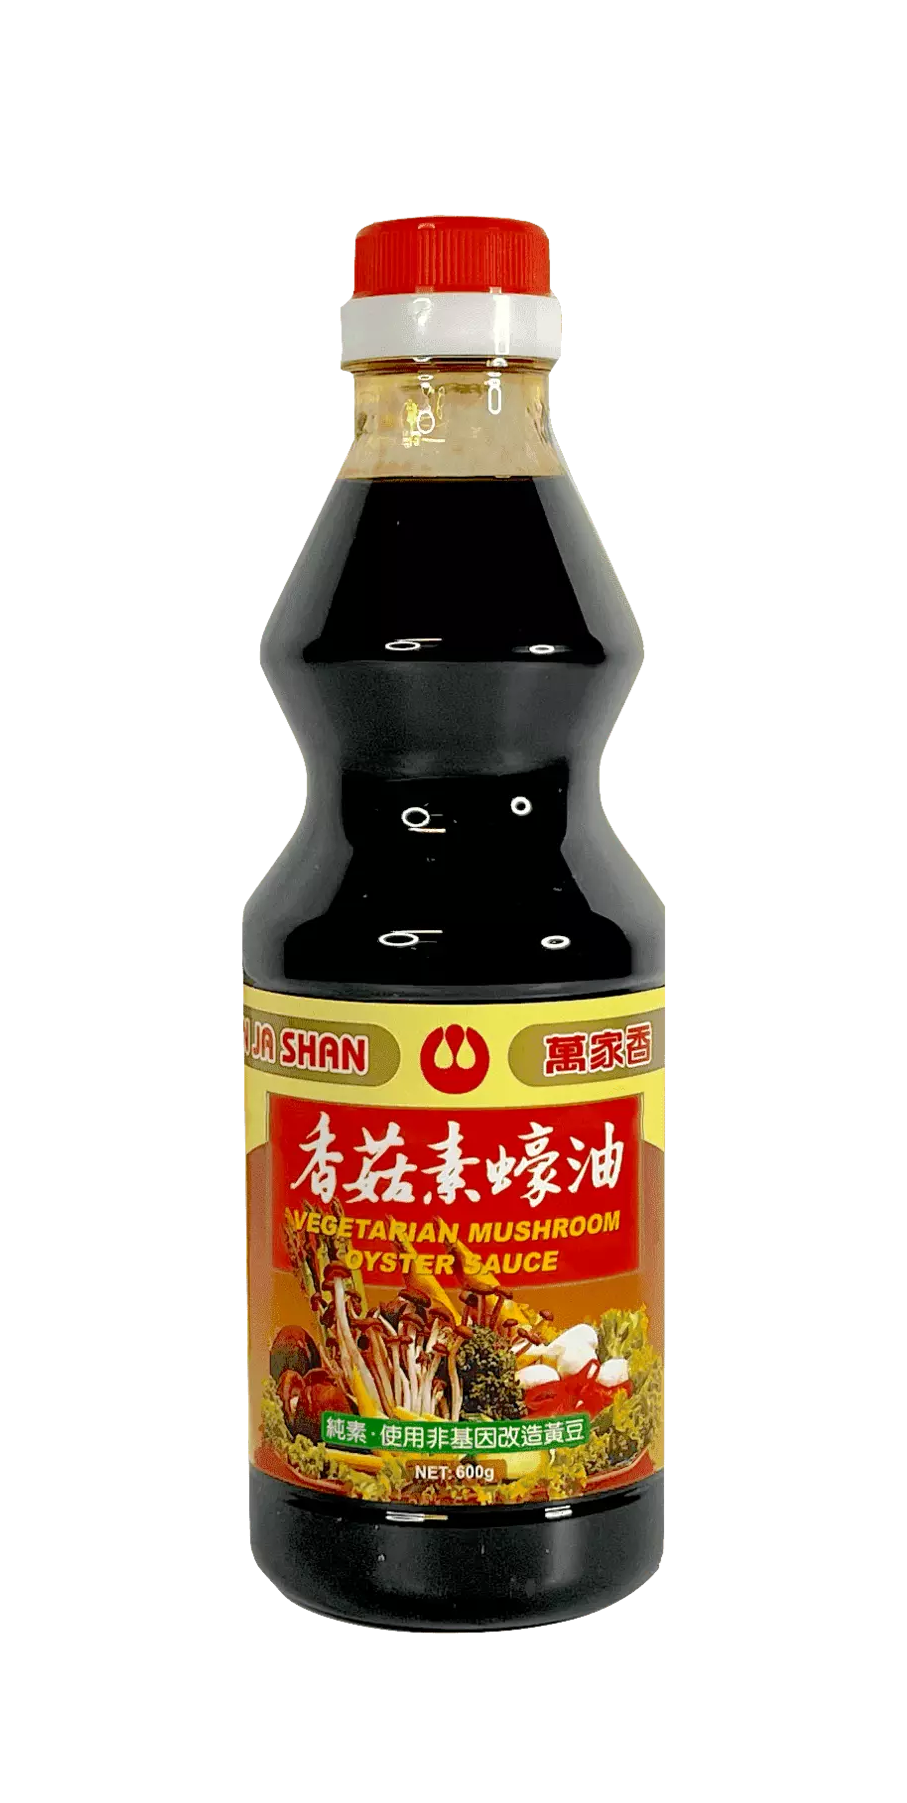 Vegetarian Mushroom Oyster Sauce 600 g Wan Jia Shan Taiwan